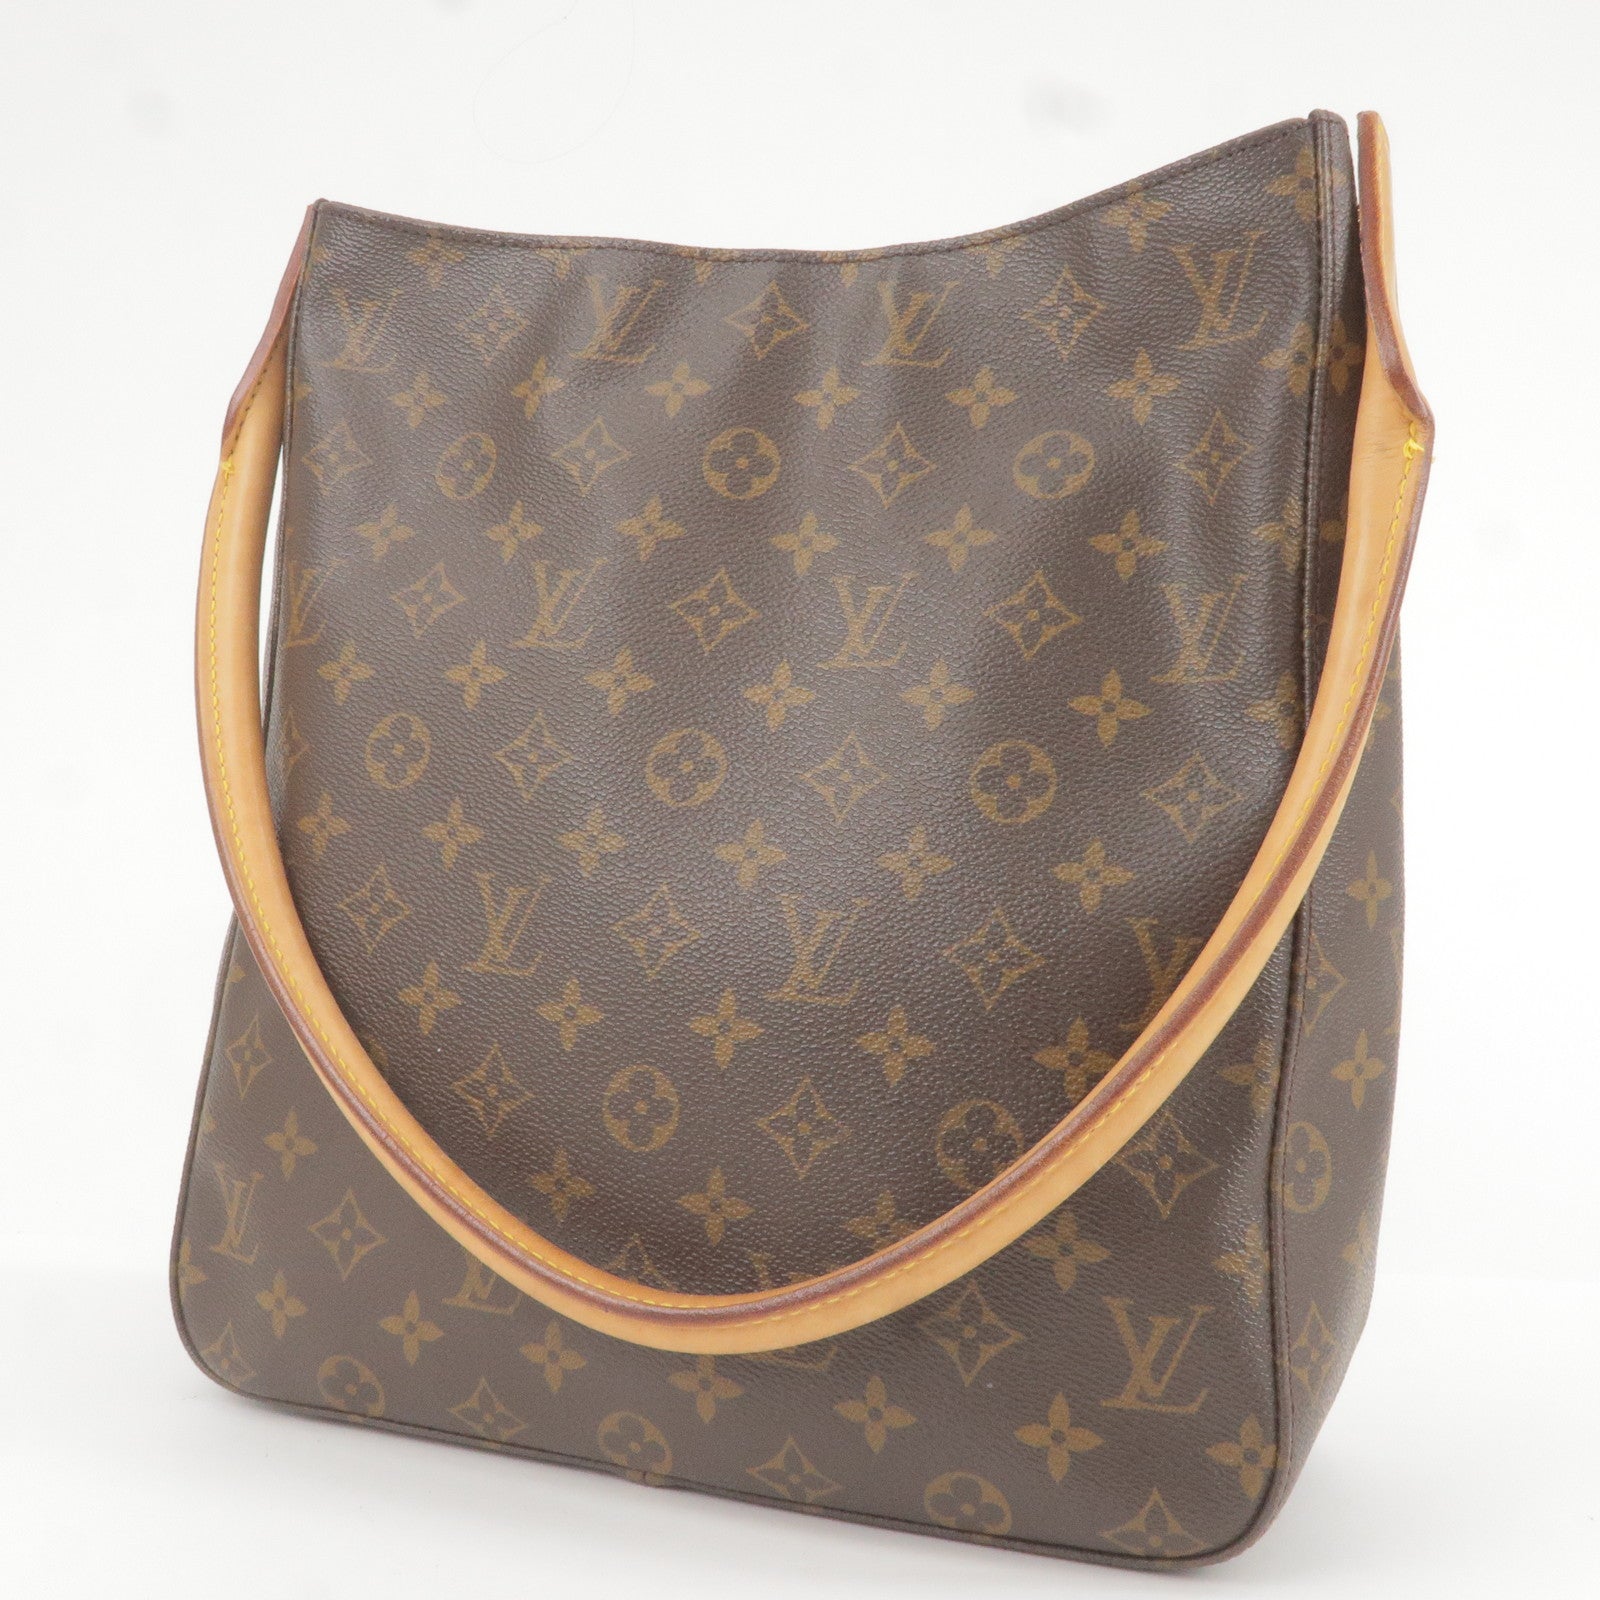 Bag - Shoulder - M51145 – dct - Hailey Baldwin wears Louis Vuitton